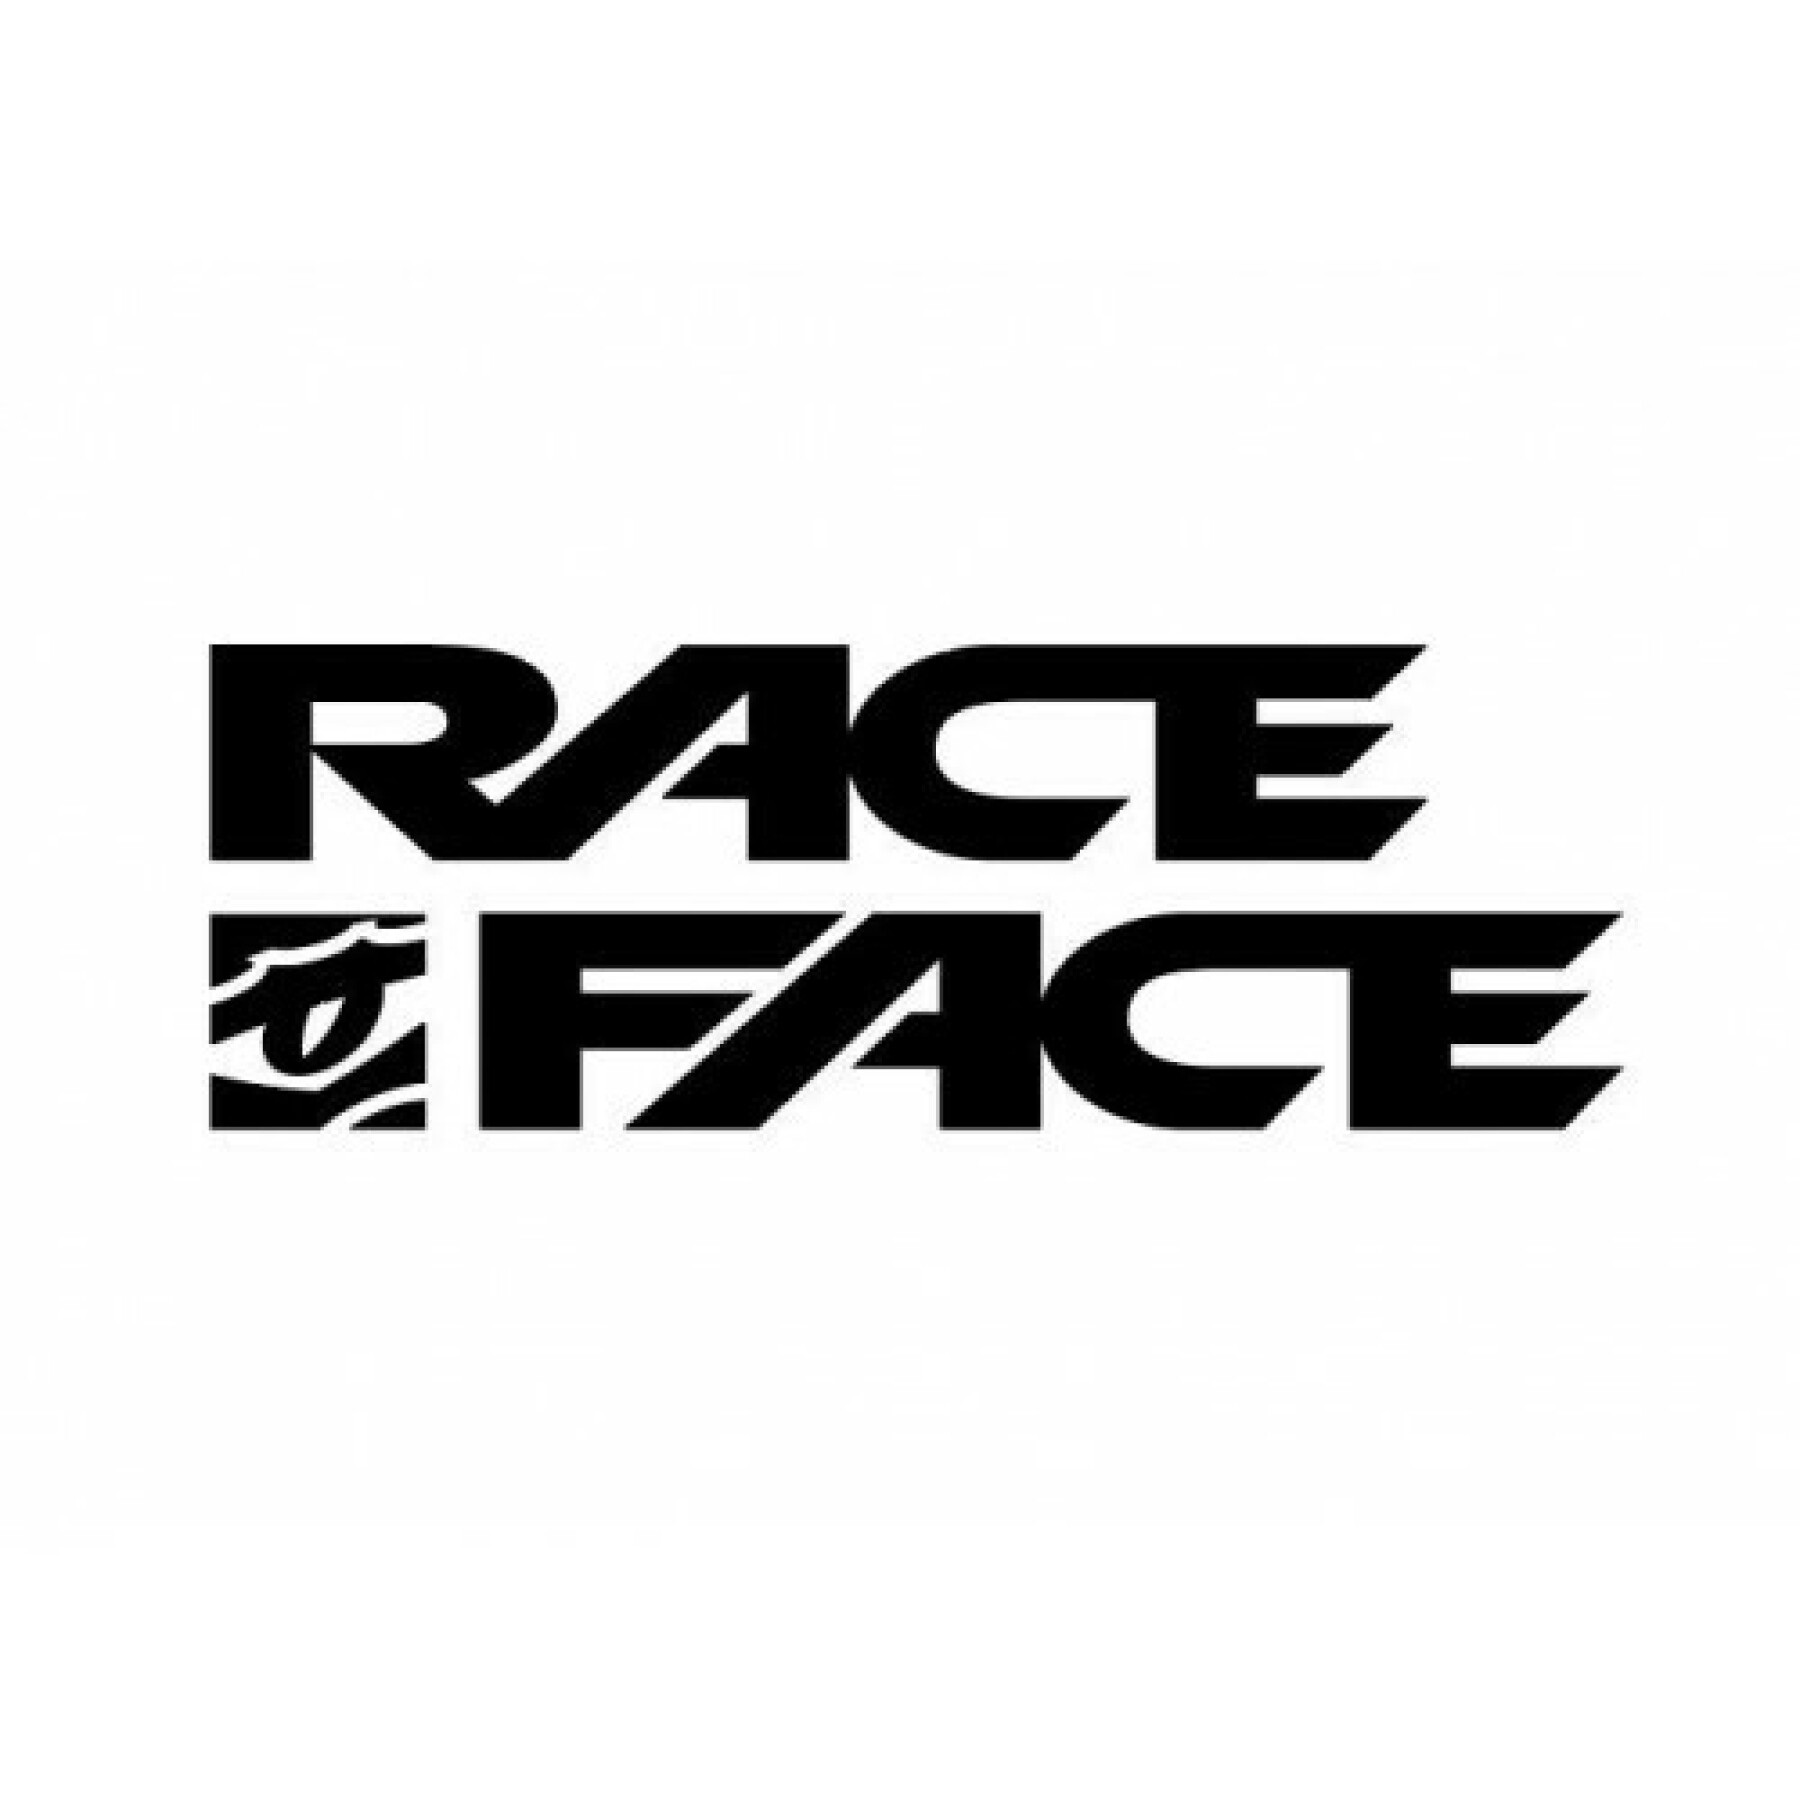 Orla Race Face arc offset - 25 - 29 - 32t